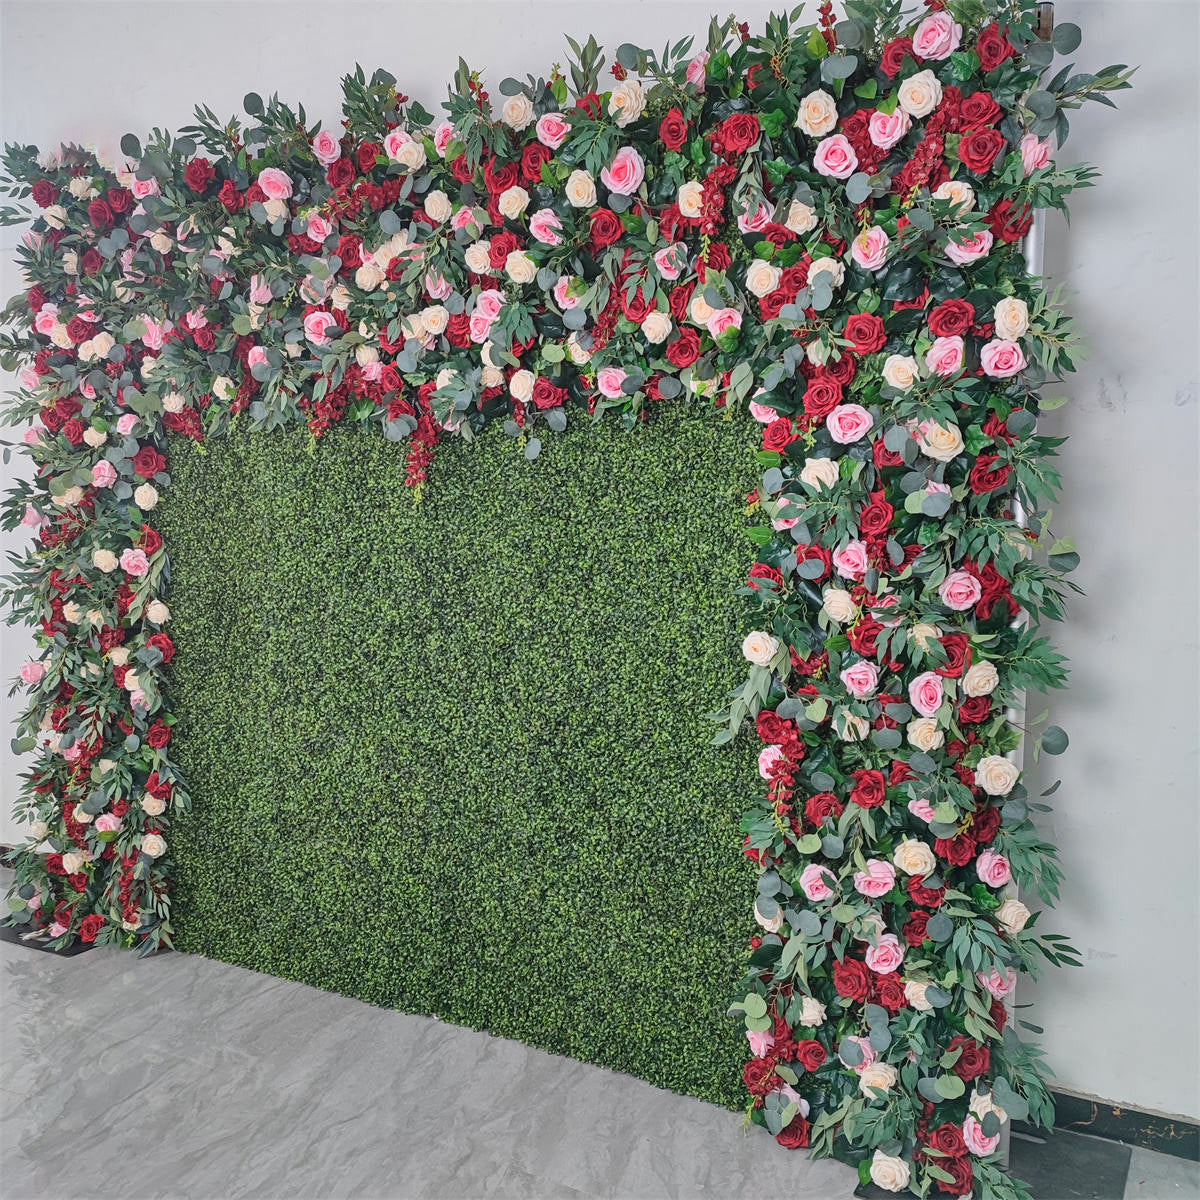 3D Artificial Flower Wall Arrangement Wedding Party Birthday Backdrop Decor HQ3733